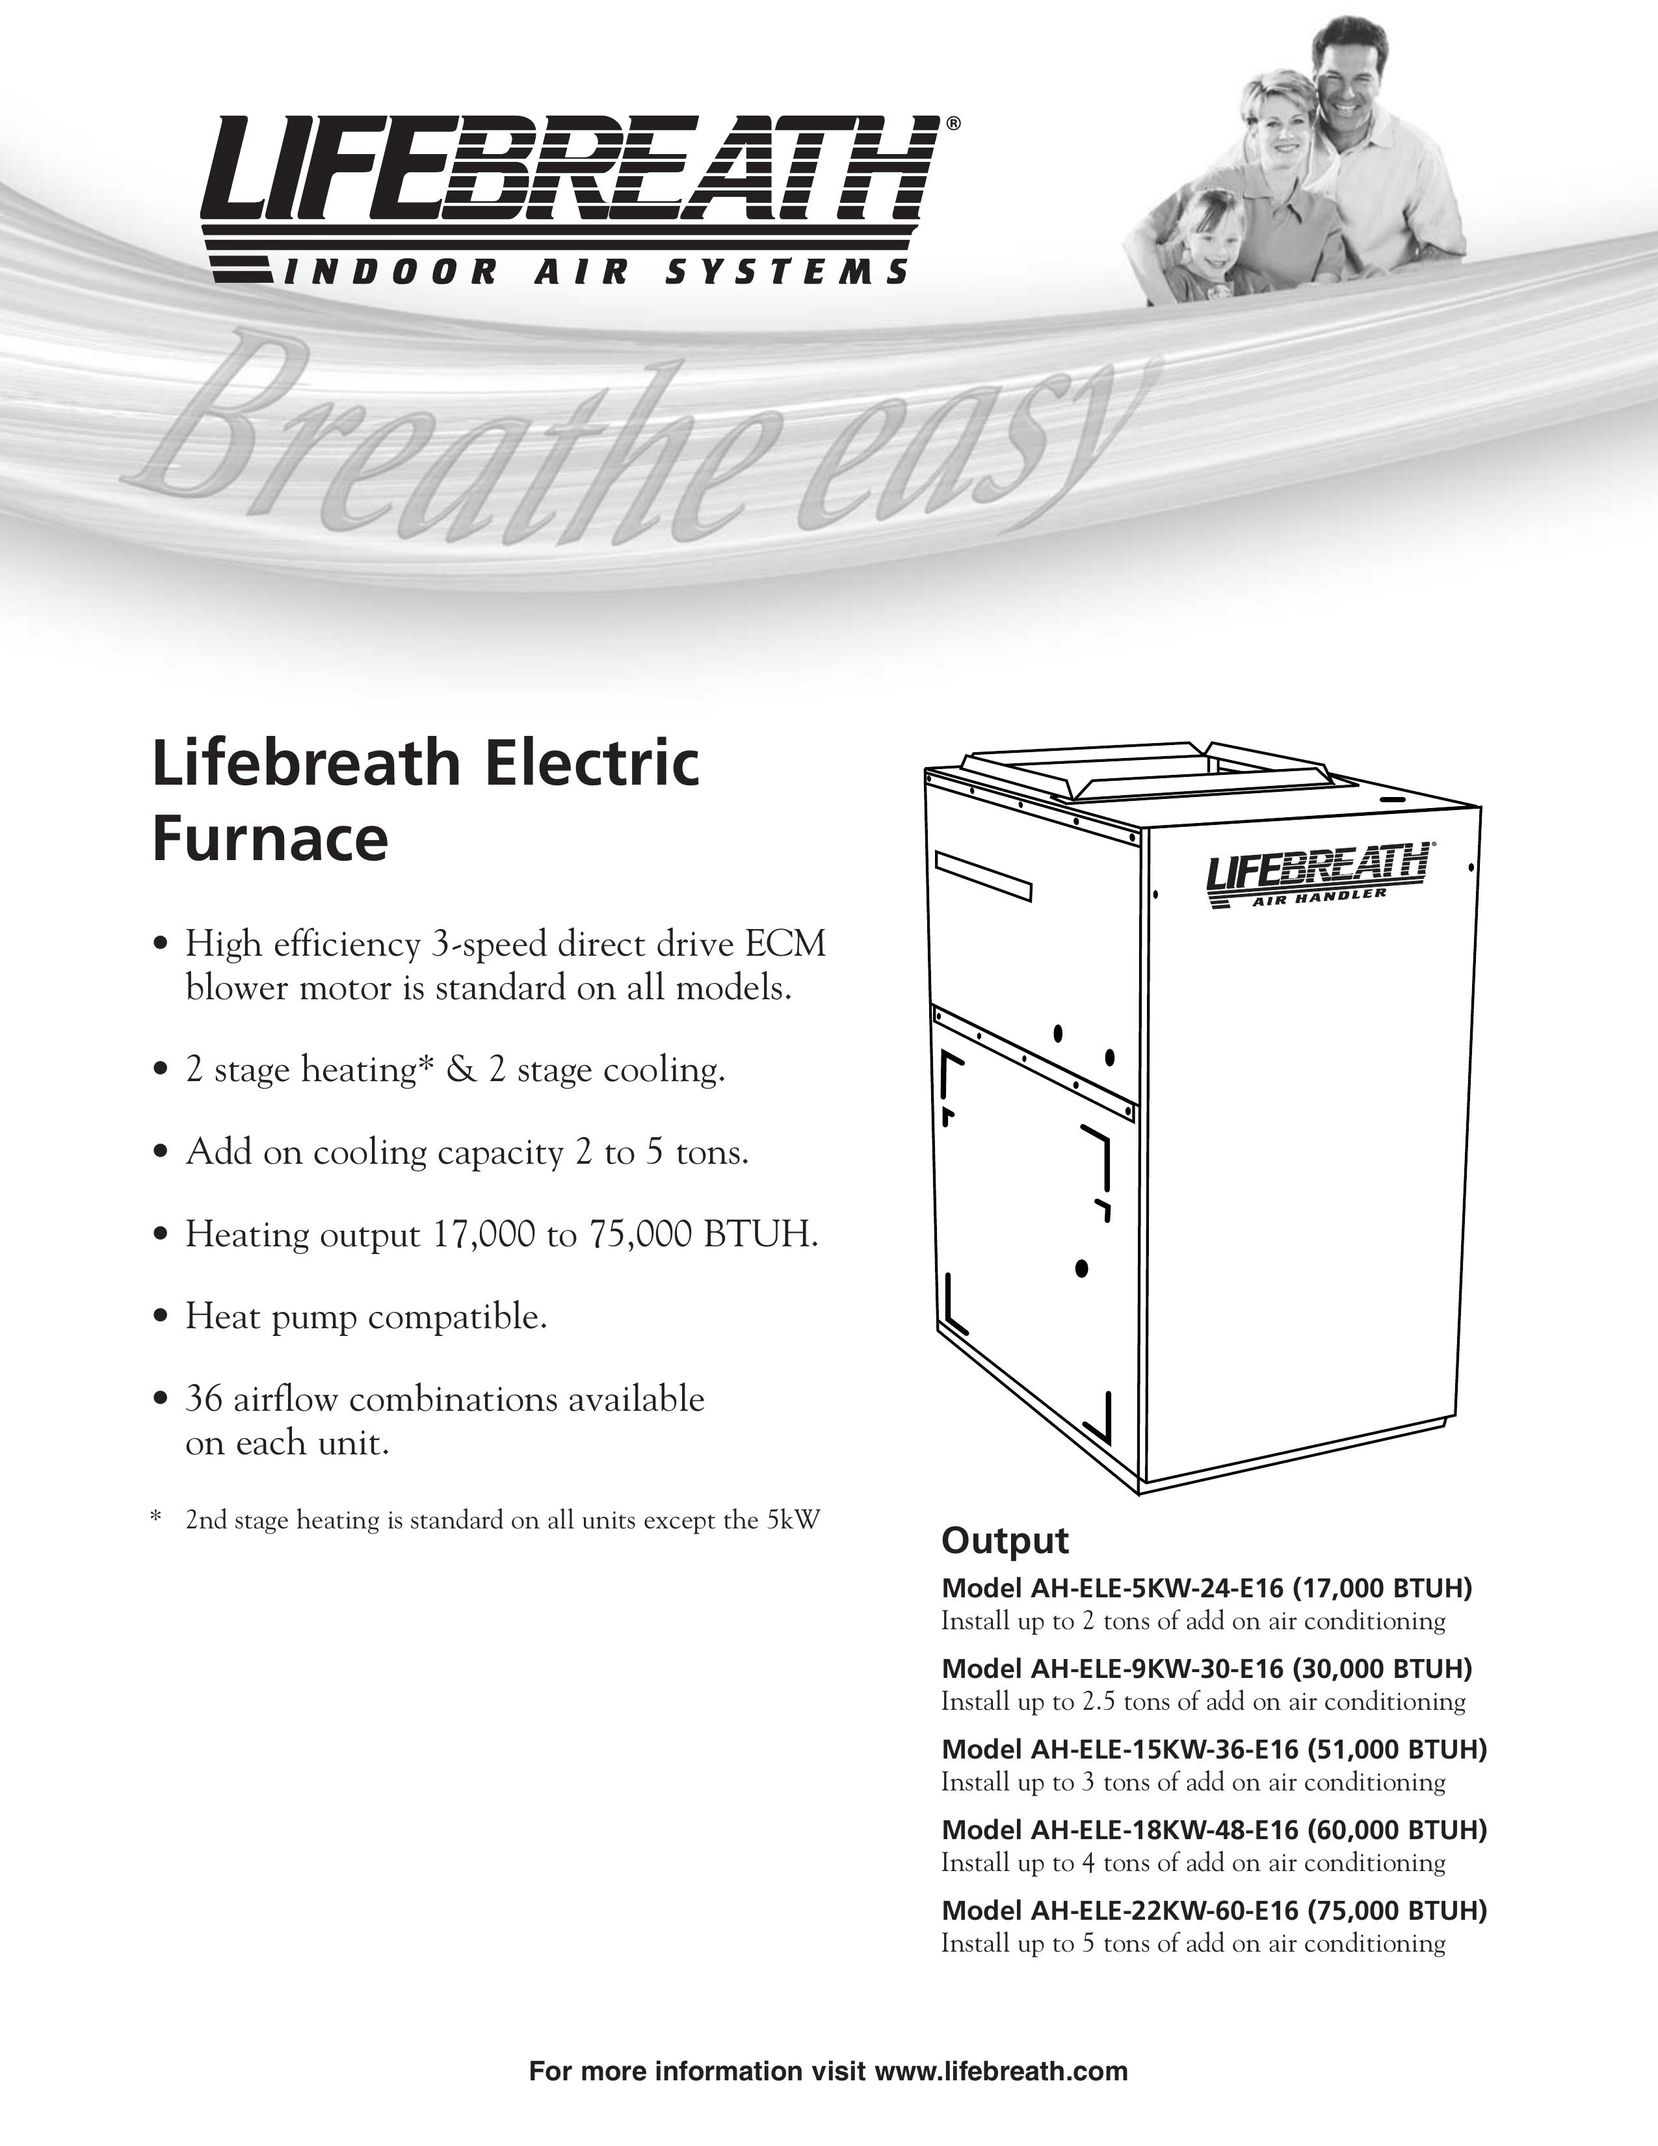 Lifebreath AH-ELE-18KW-48-E16 Thermostat User Manual